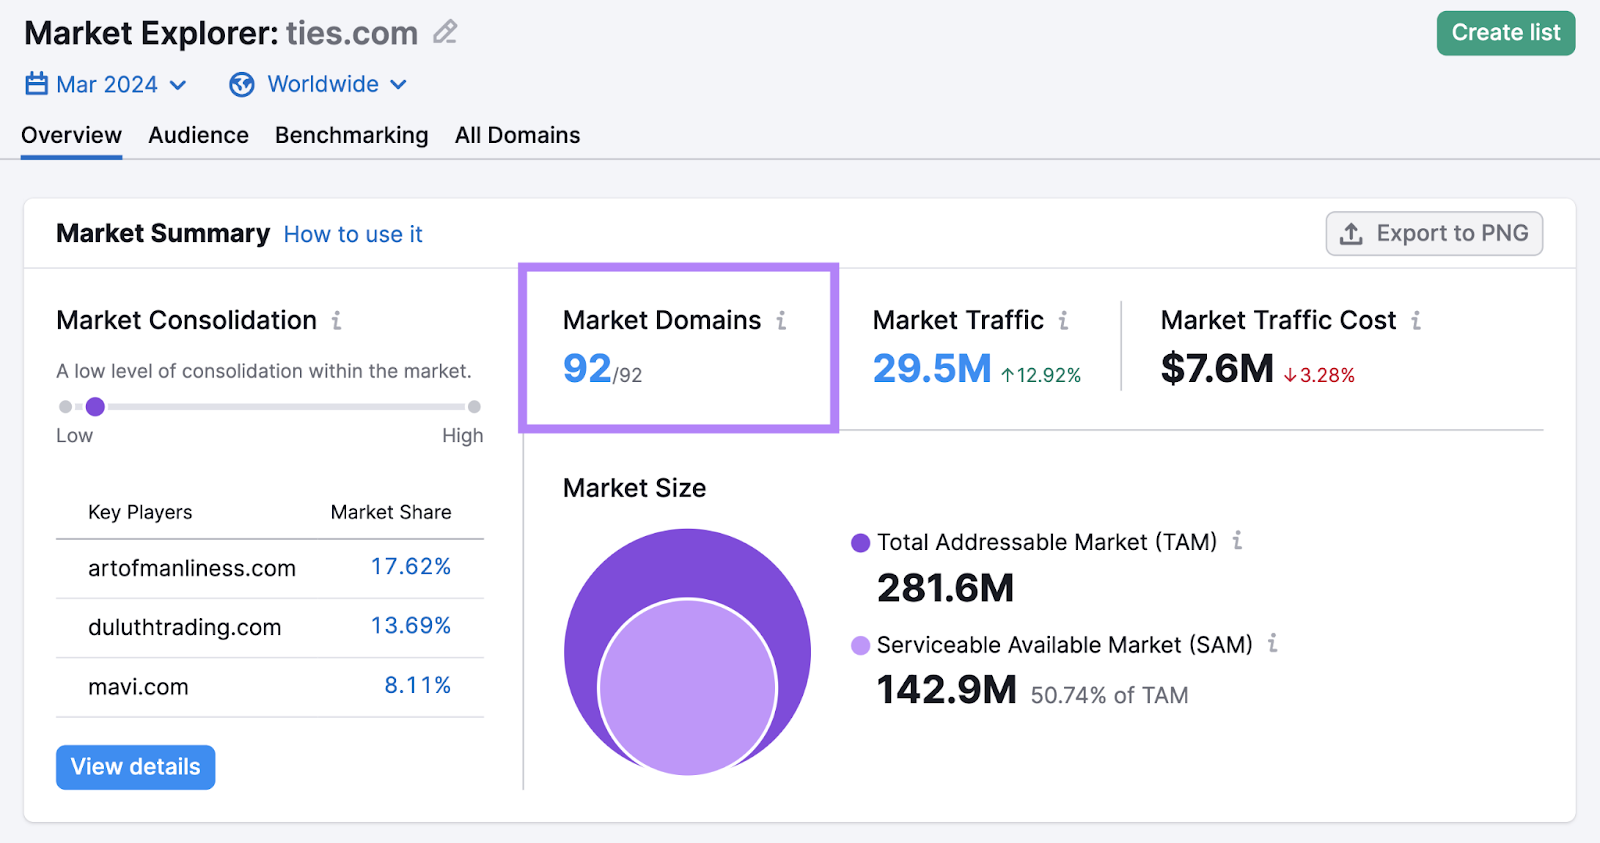 ties.com has 92 market domains